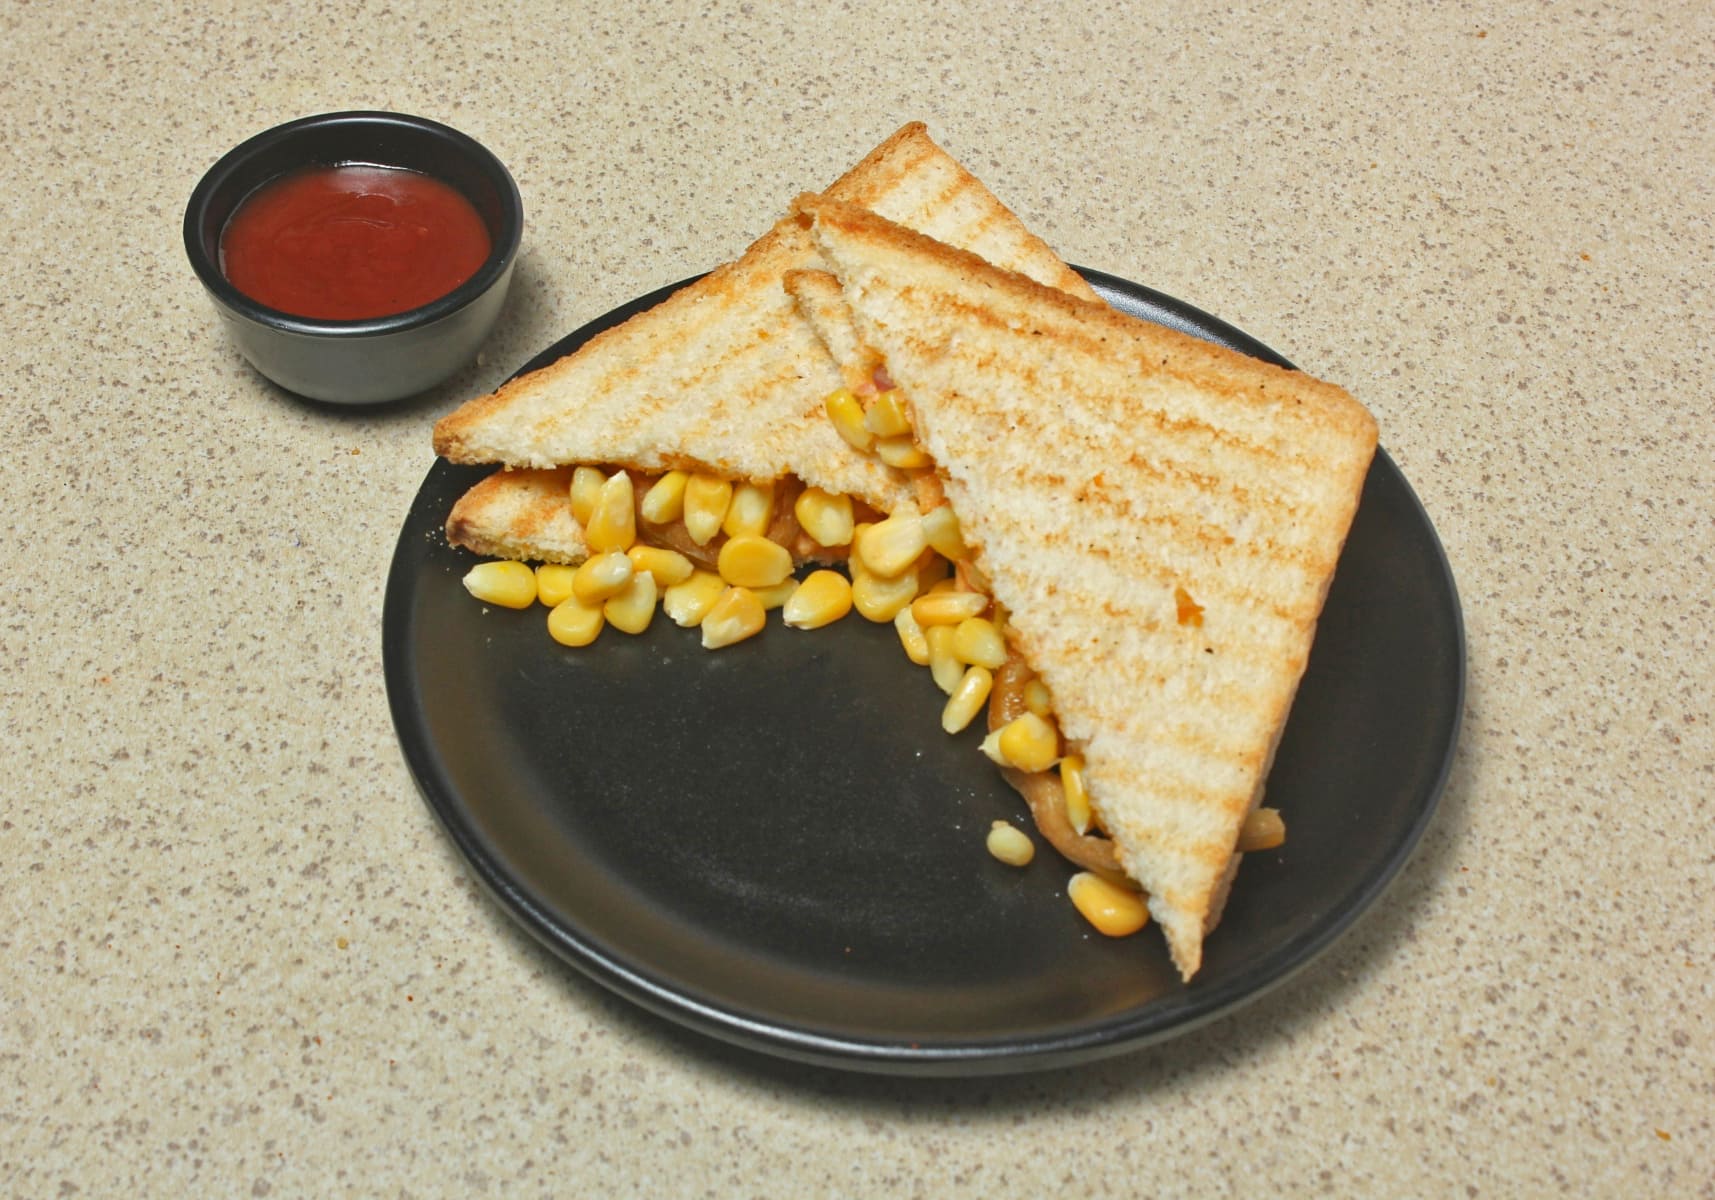 Corn Sandwich